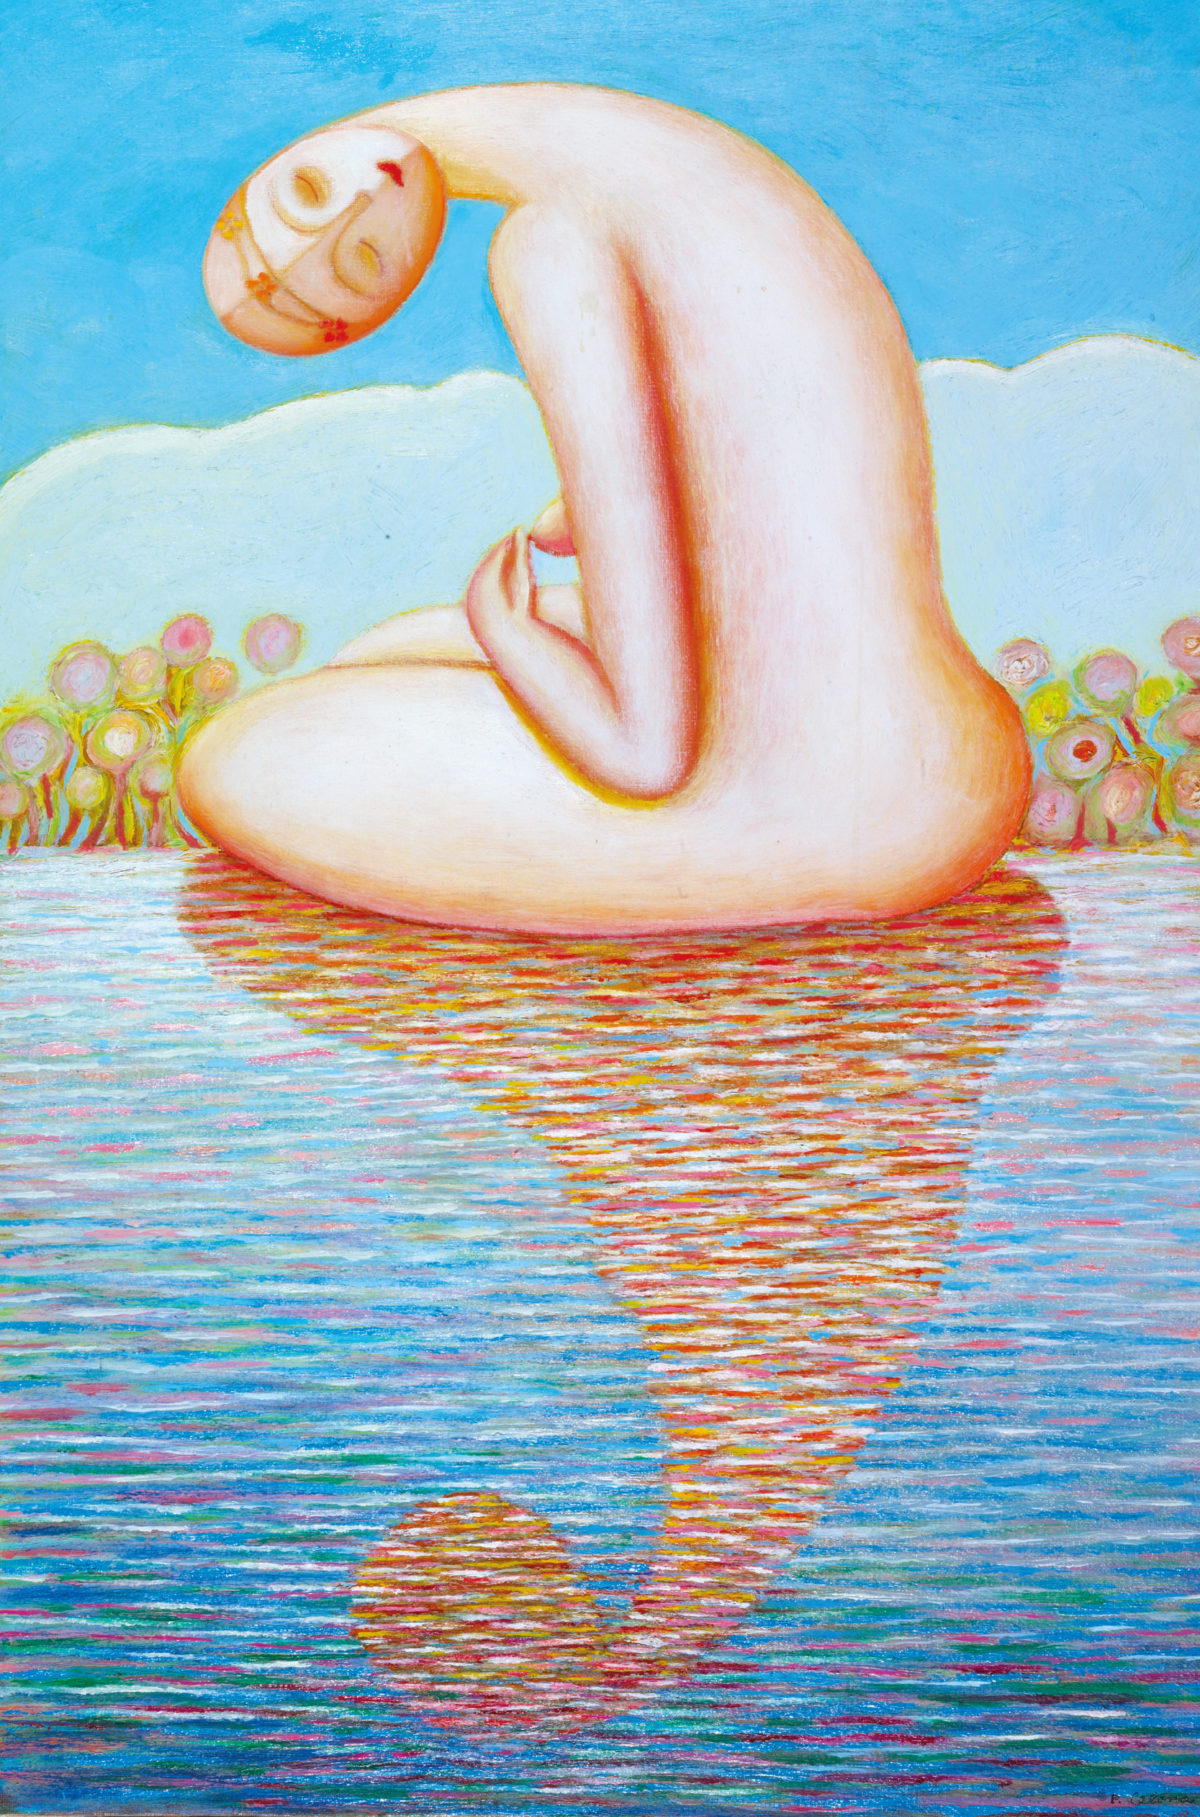 Figura sull'acqua, ca. 1990
Pasquale Celona
Olio su tela
100 x 60 cm
FV053